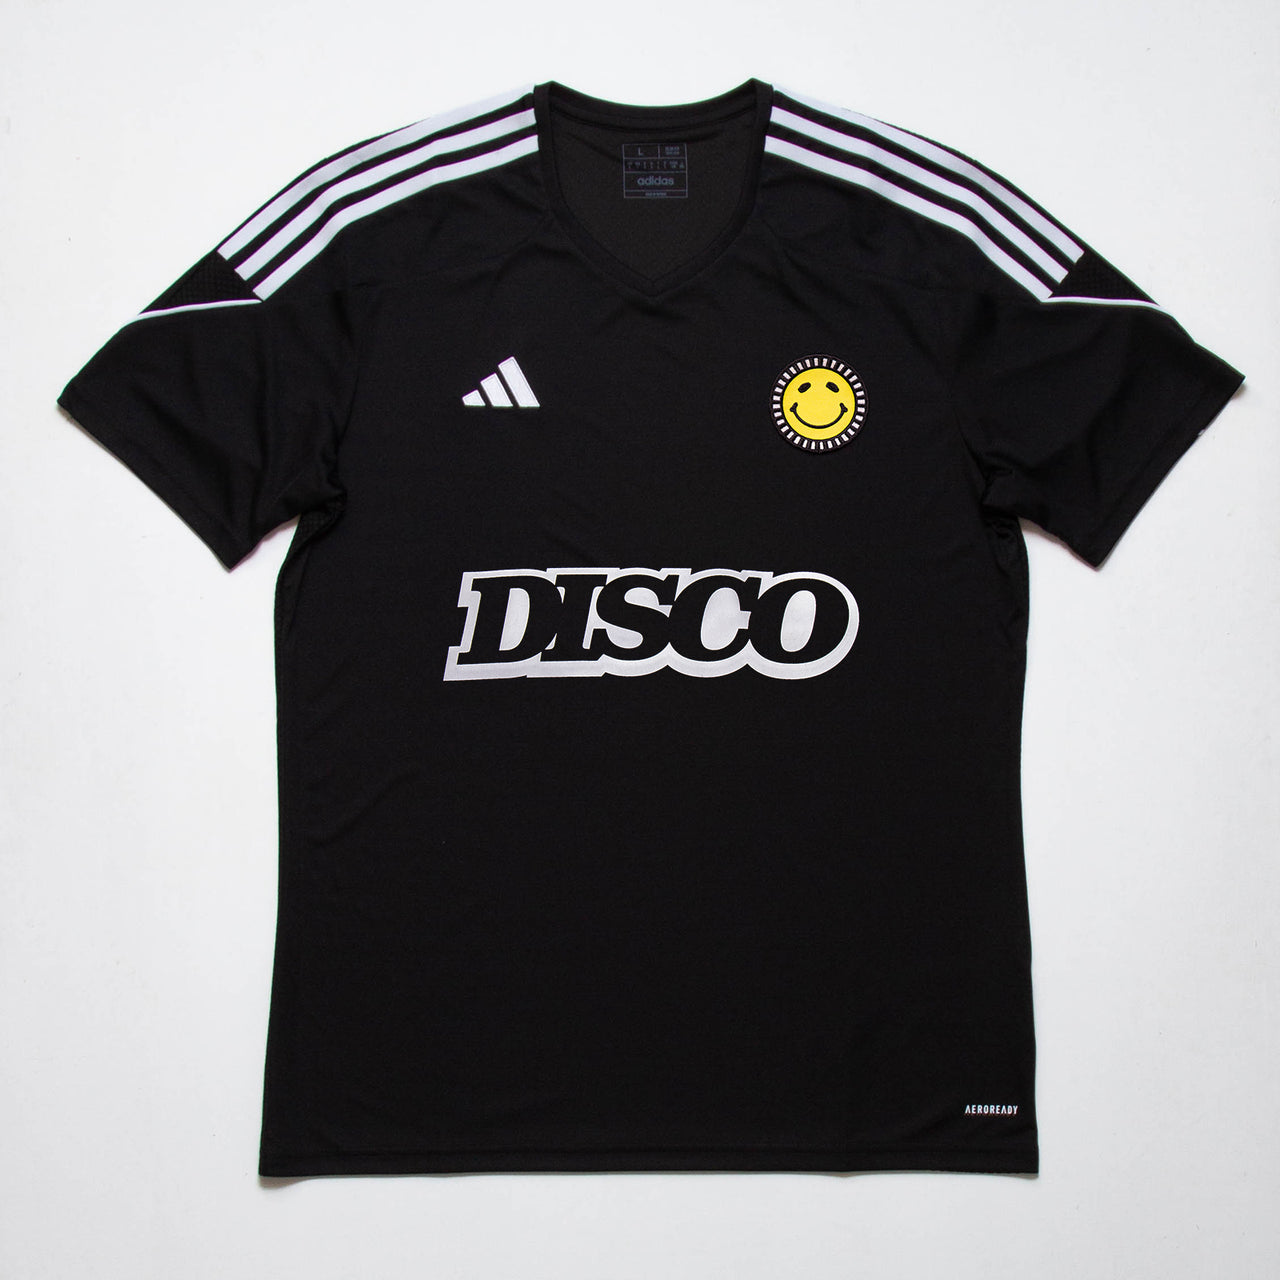 Disco Town FC League Tiro 23 - Training Jersey - Black/White